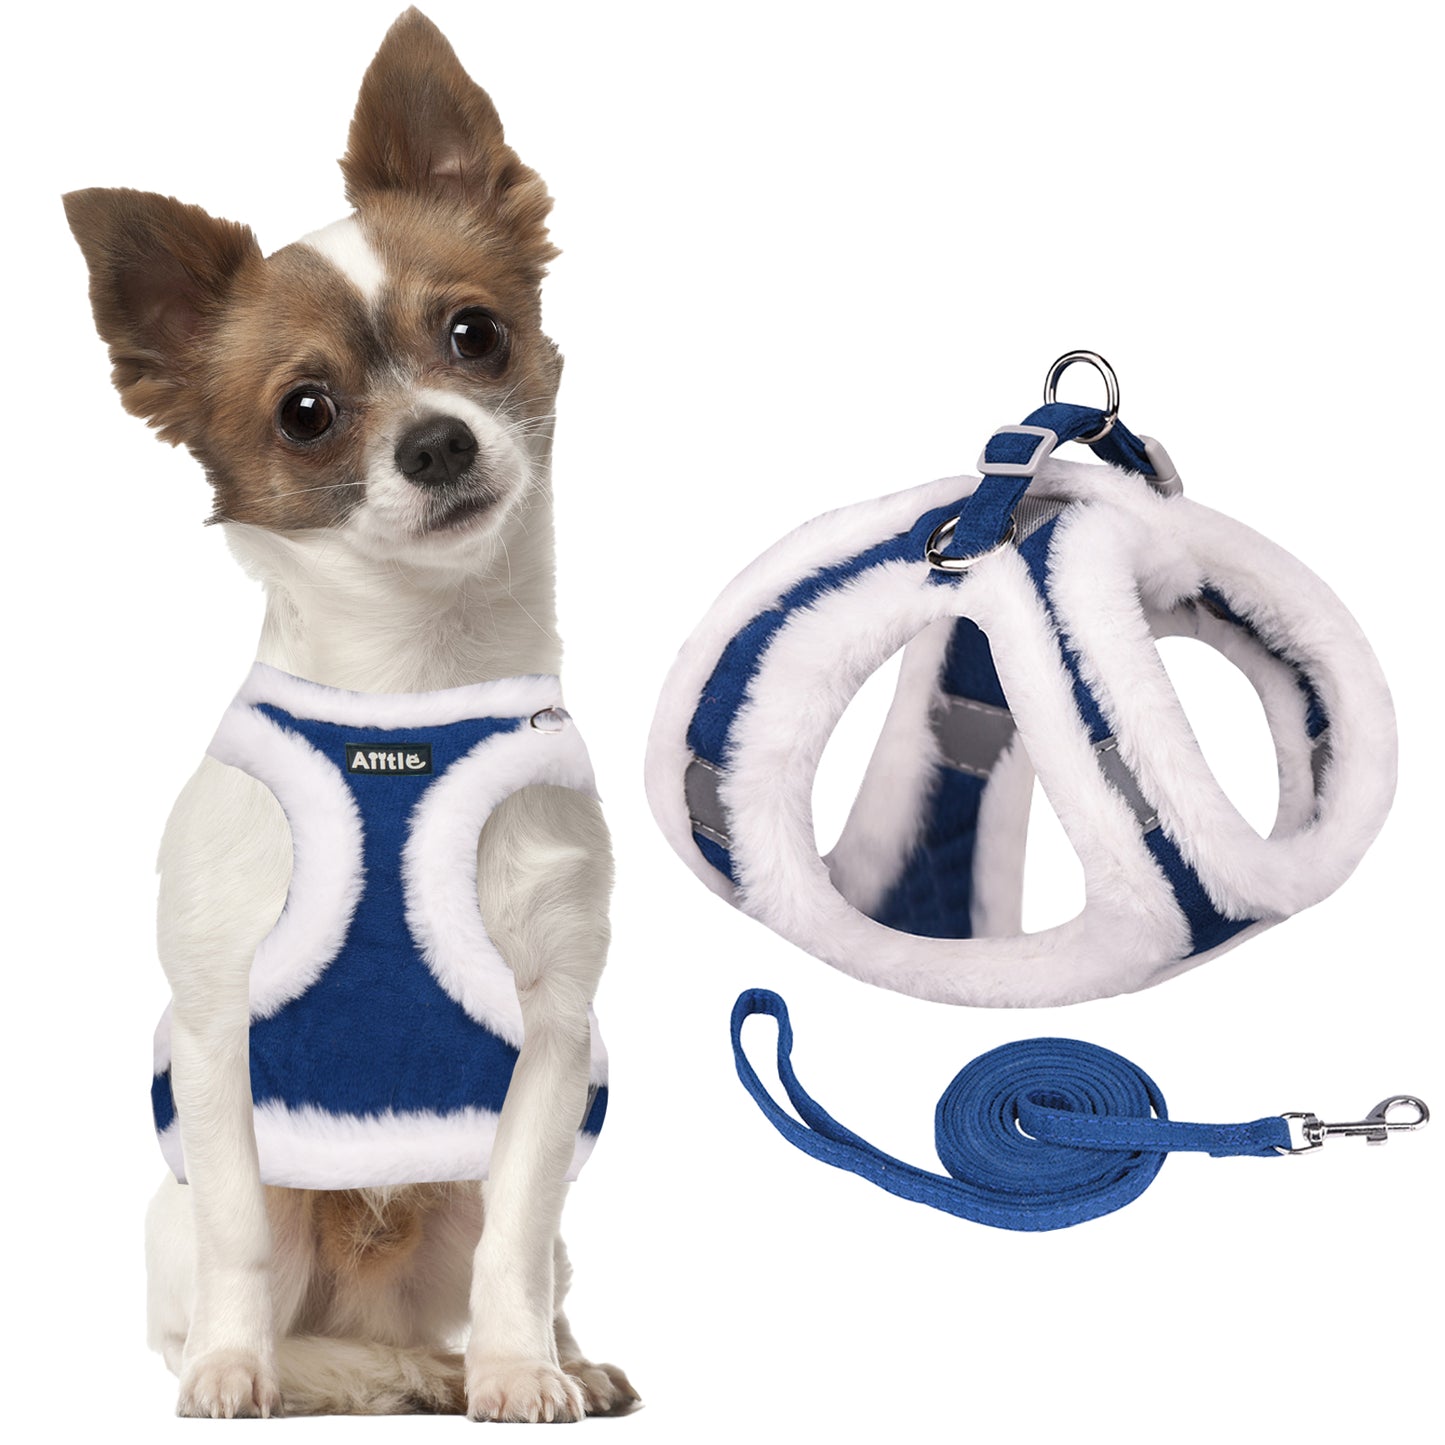 Aiitle Winter Plush Dog No Pull Harness and Leash Set